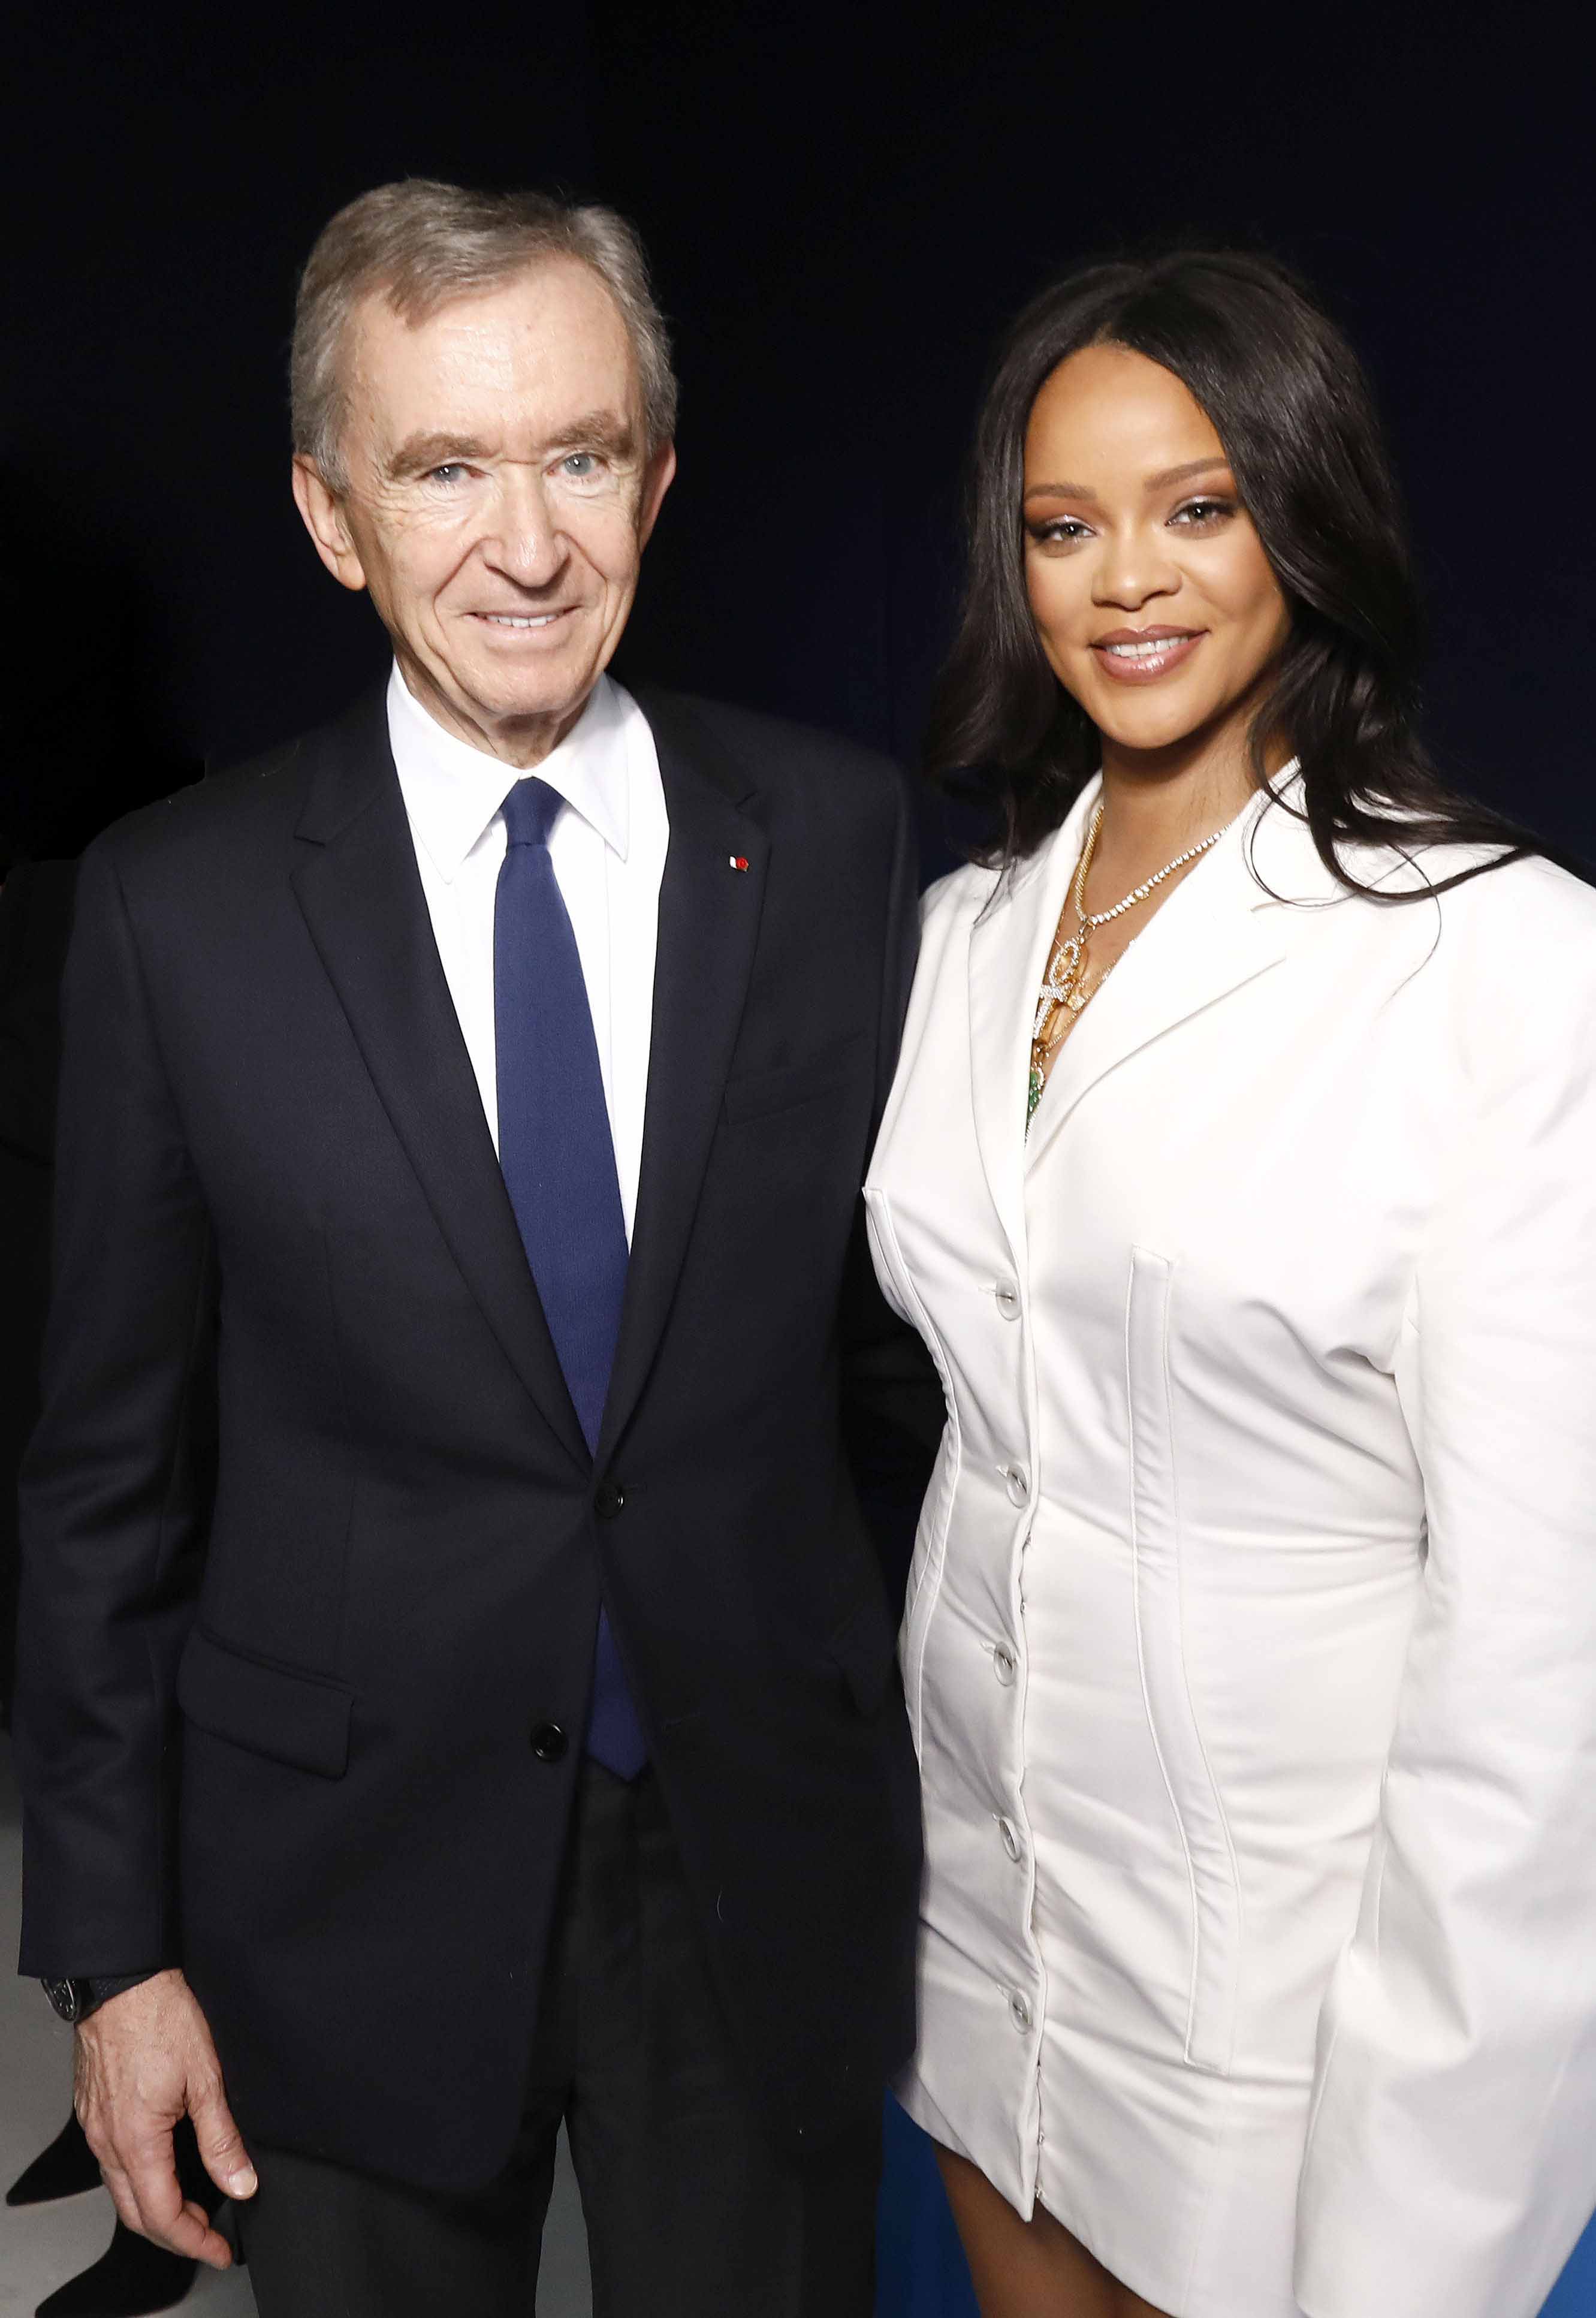 Rihanna debuts much-anticipated Fenty fashion line - ABC News